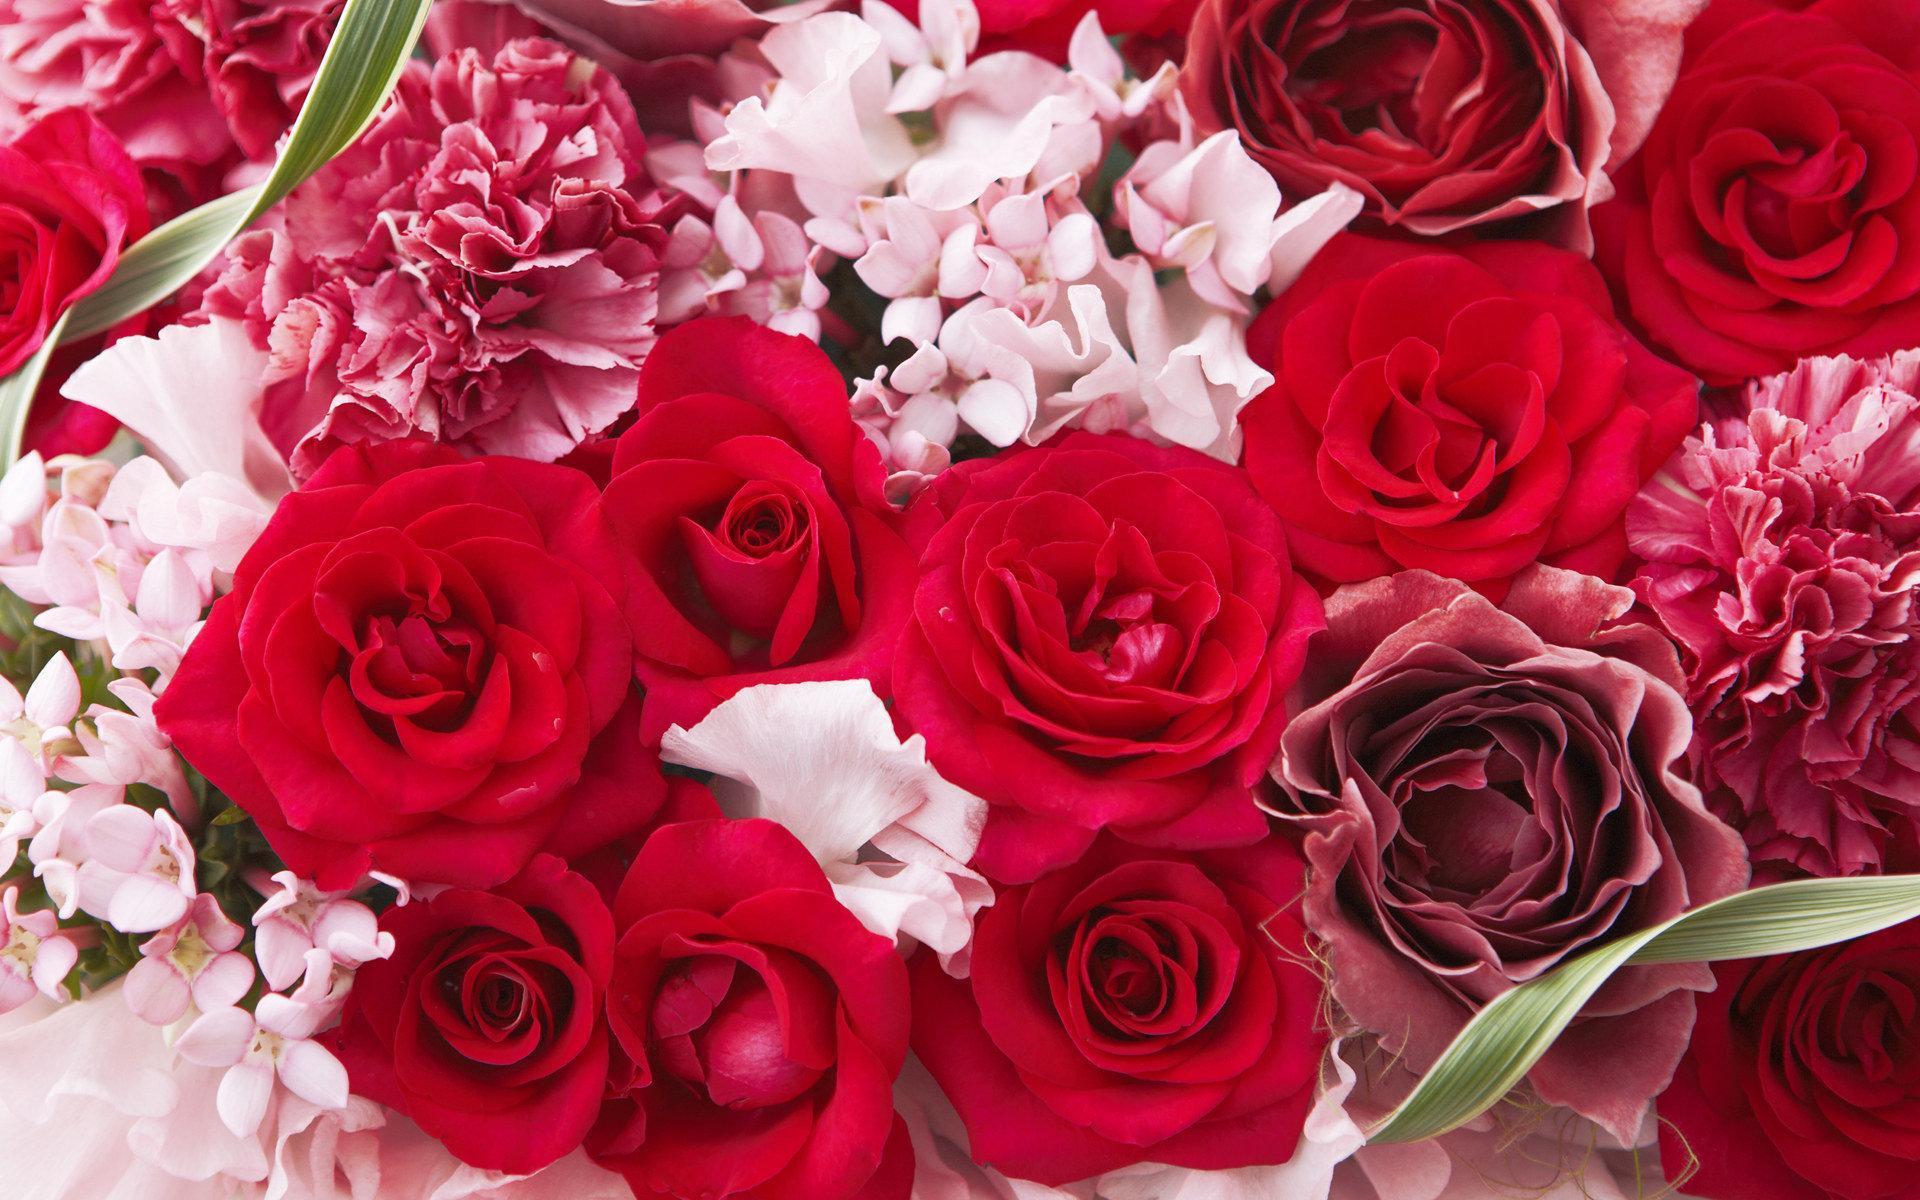 Romantic Roses - Roses Wallpaper (13966106) - Fanpop